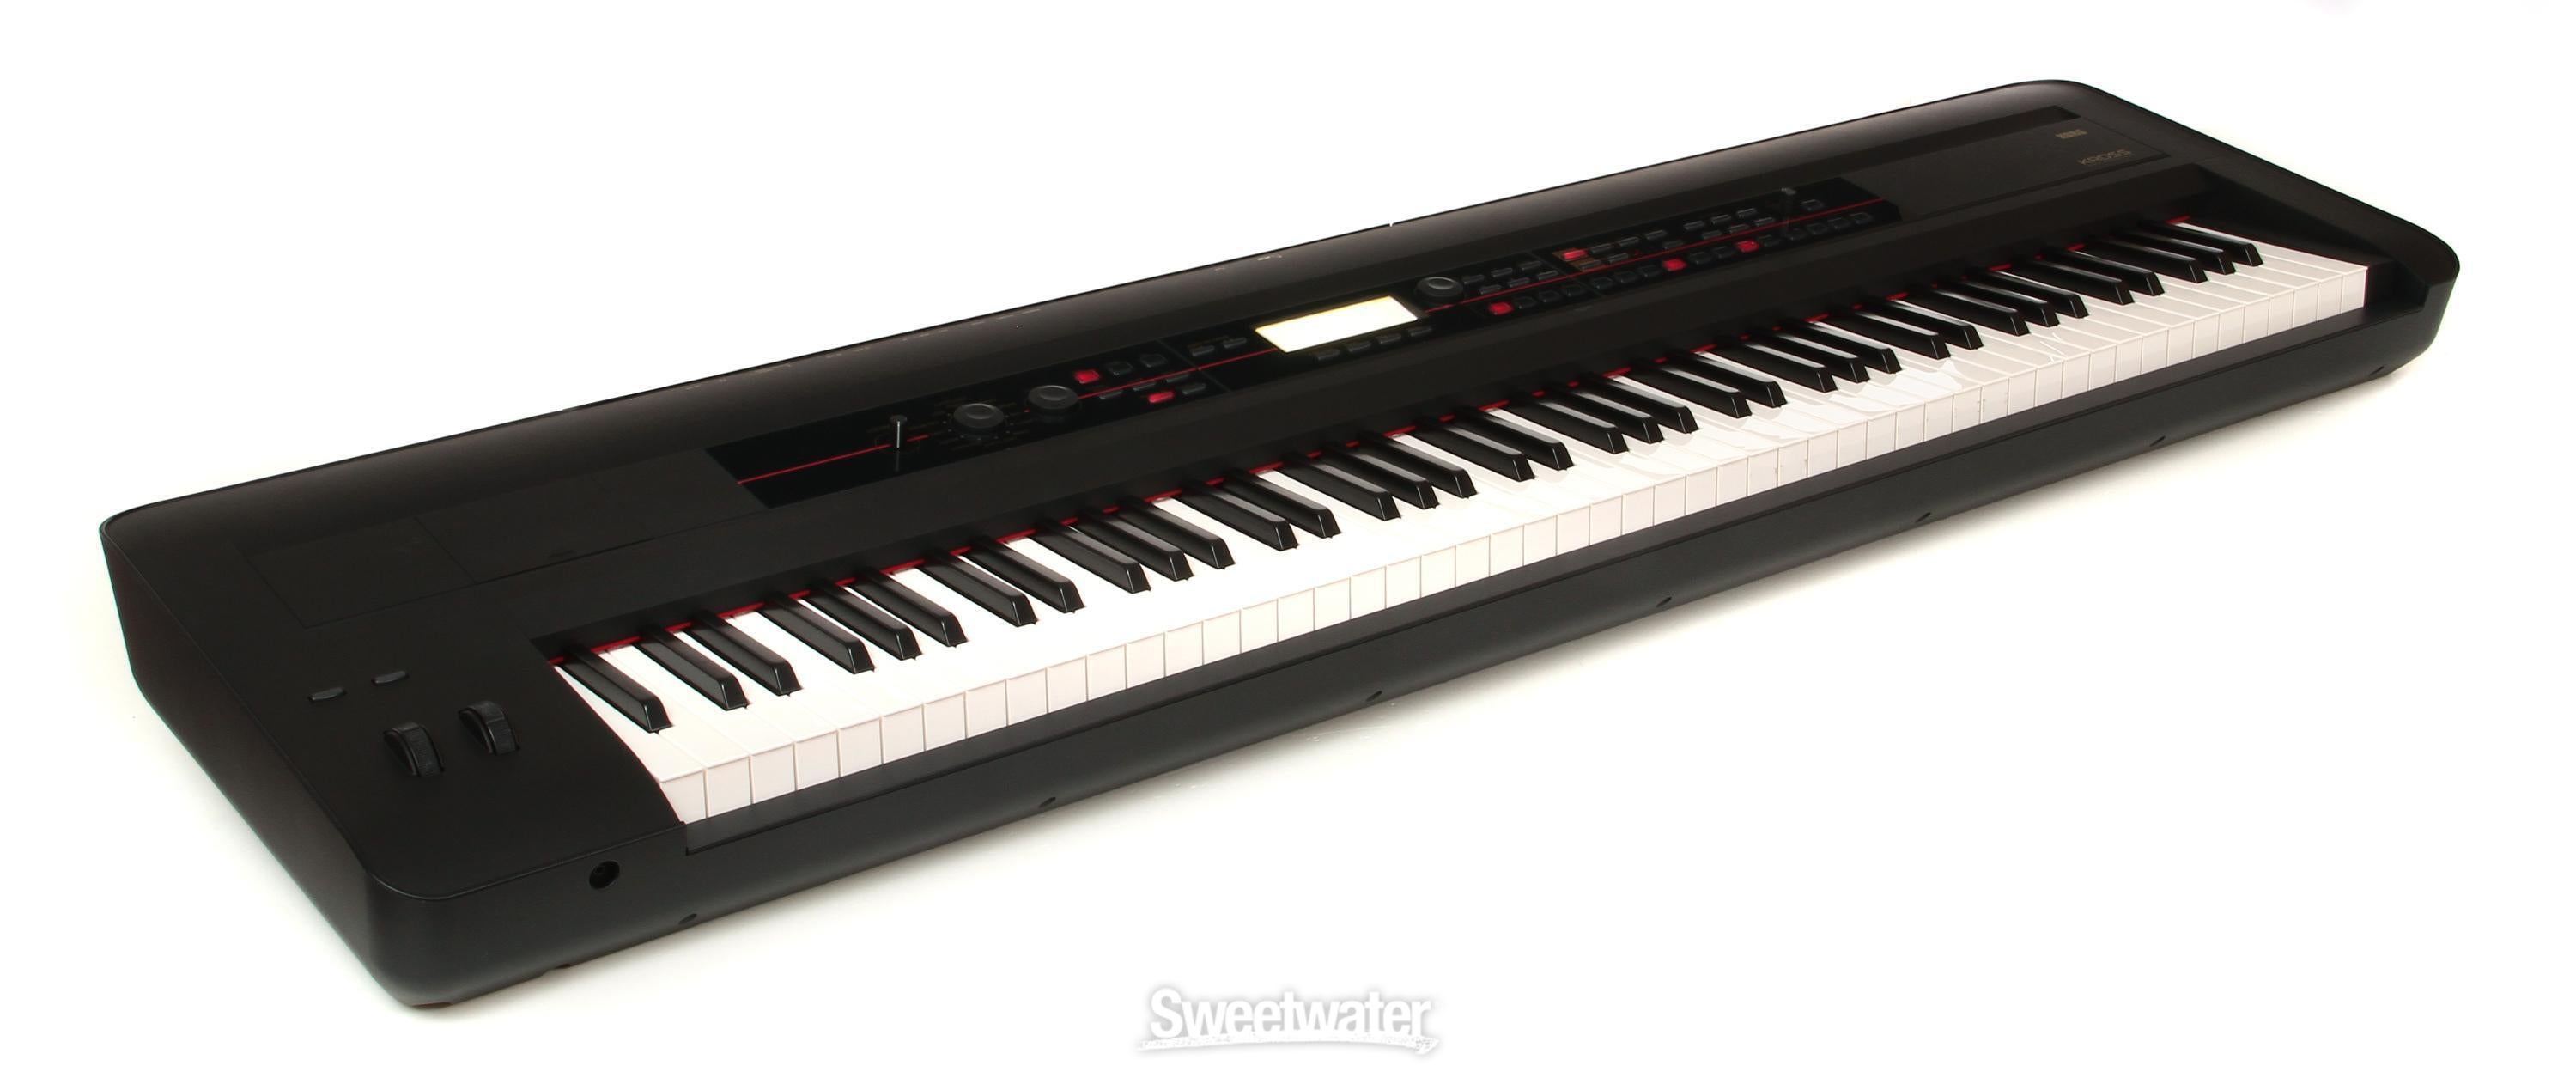 Korg Kross 88-key Synthesizer Workstation - Black | Sweetwater